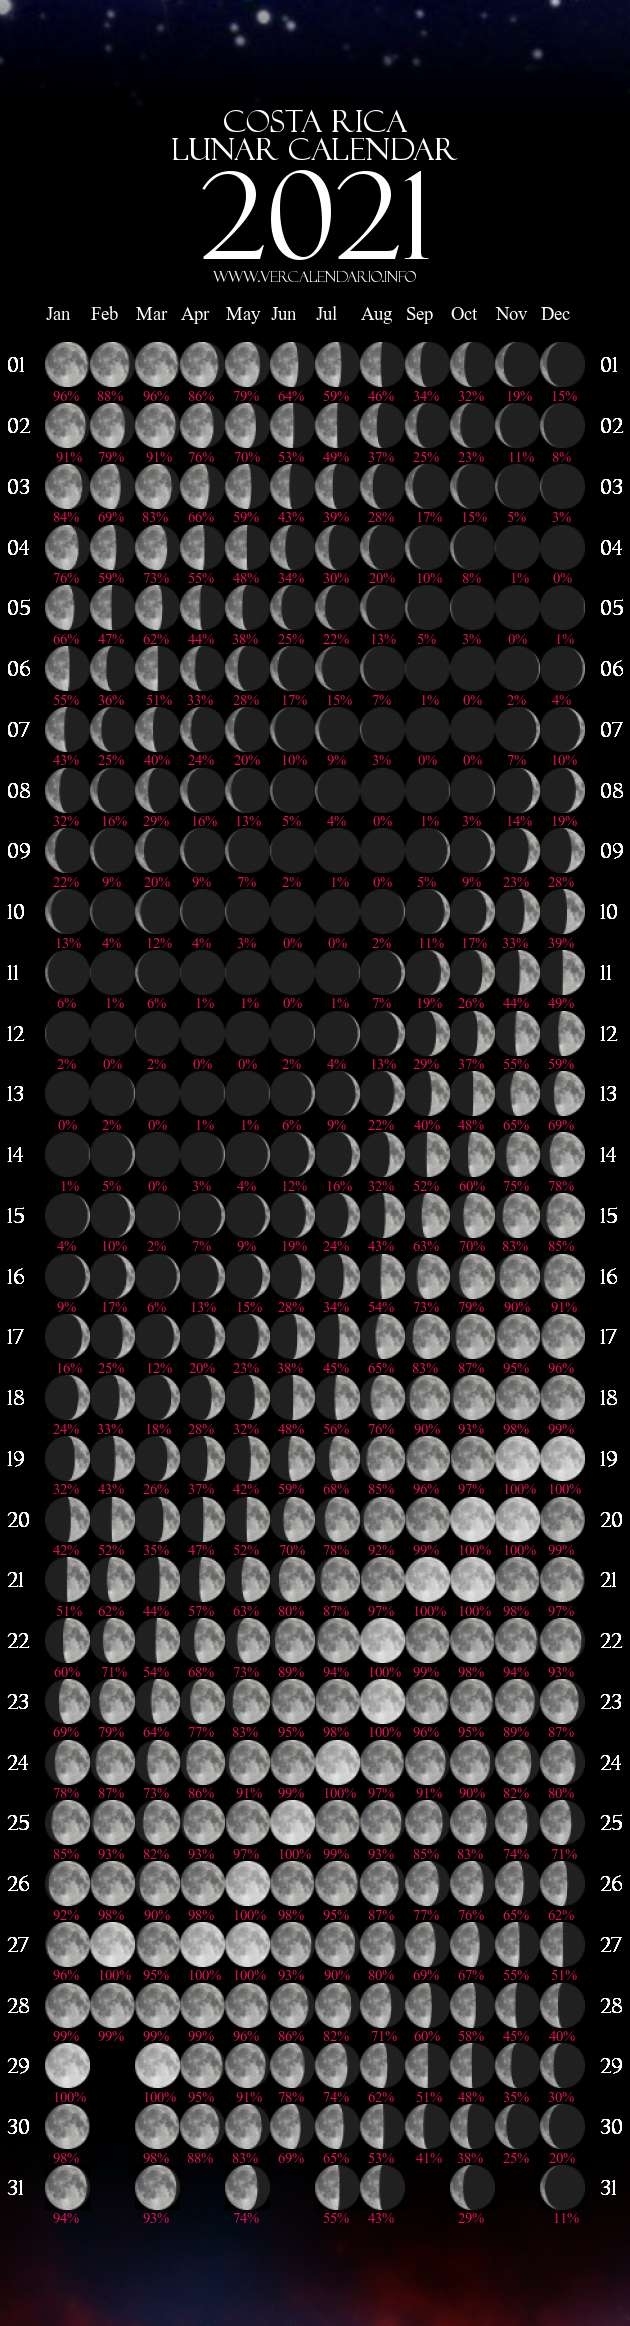 Spain Moon Calendar June 2021 | Printable March August 2021 Full Moon Calendar